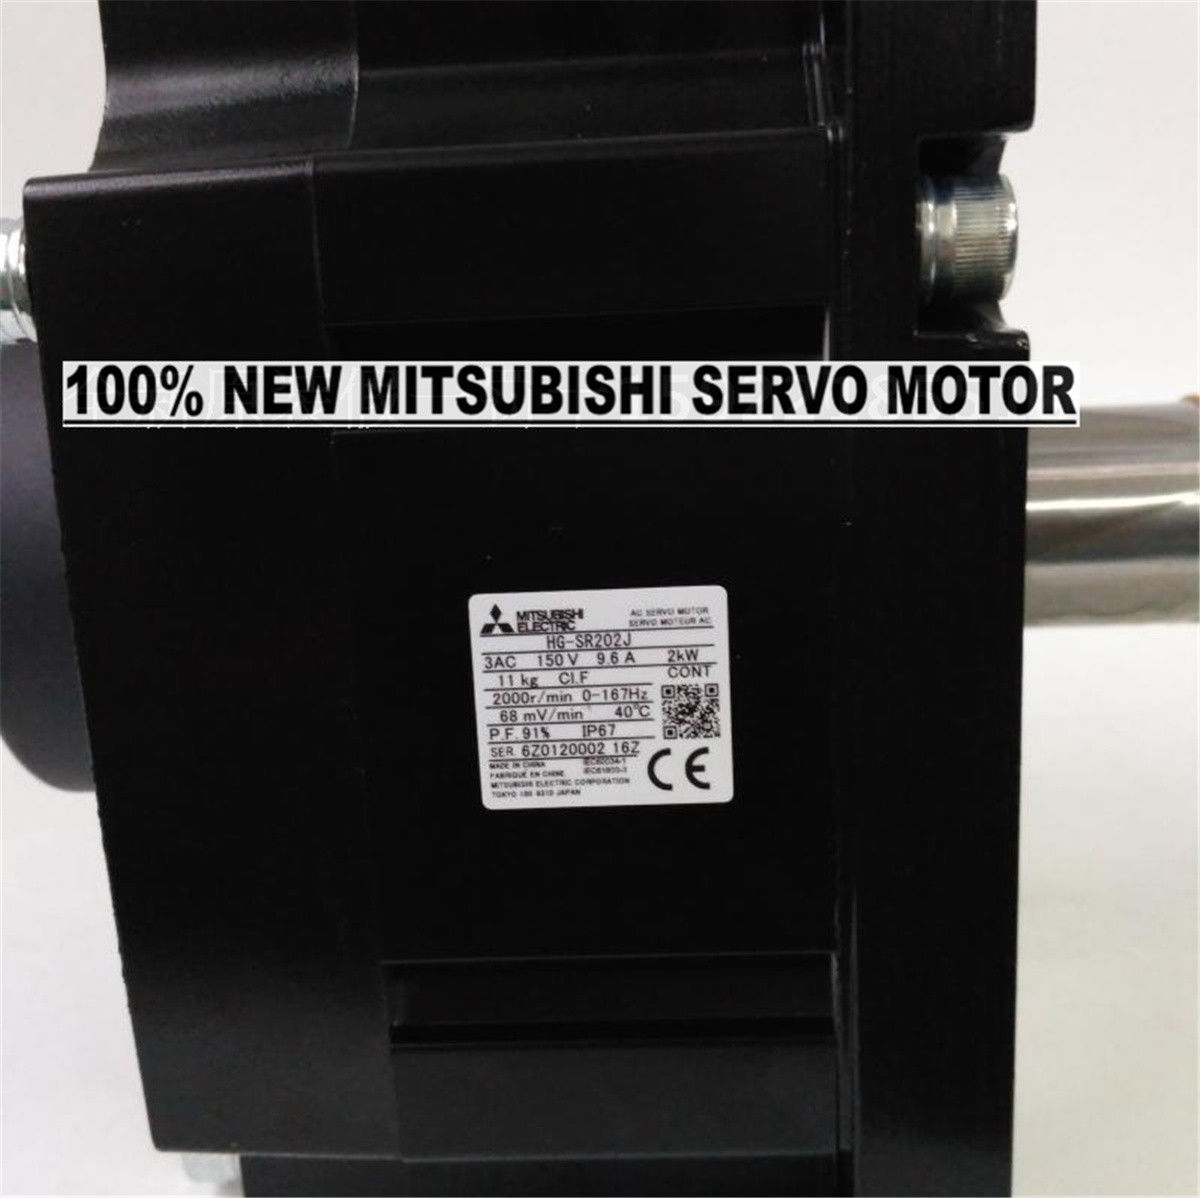 NEW Mitsubishi Servo Motor HG-SR202J in box HGSR202J - Click Image to Close